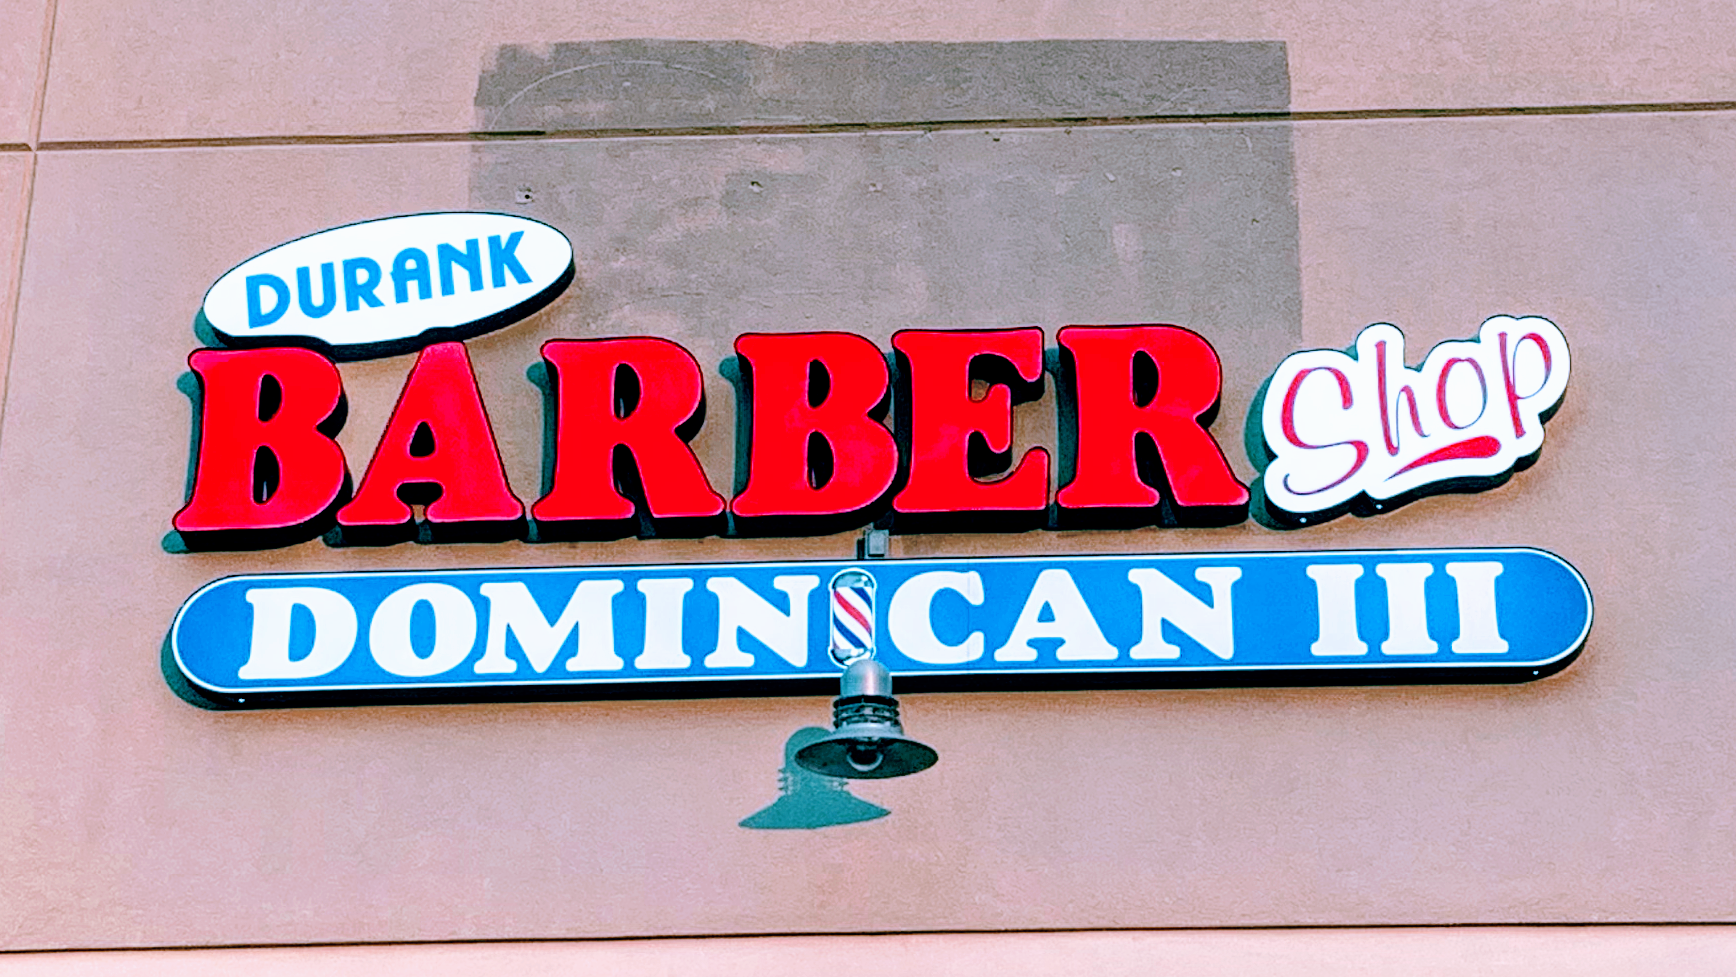 Durank barbershop Dominican lll